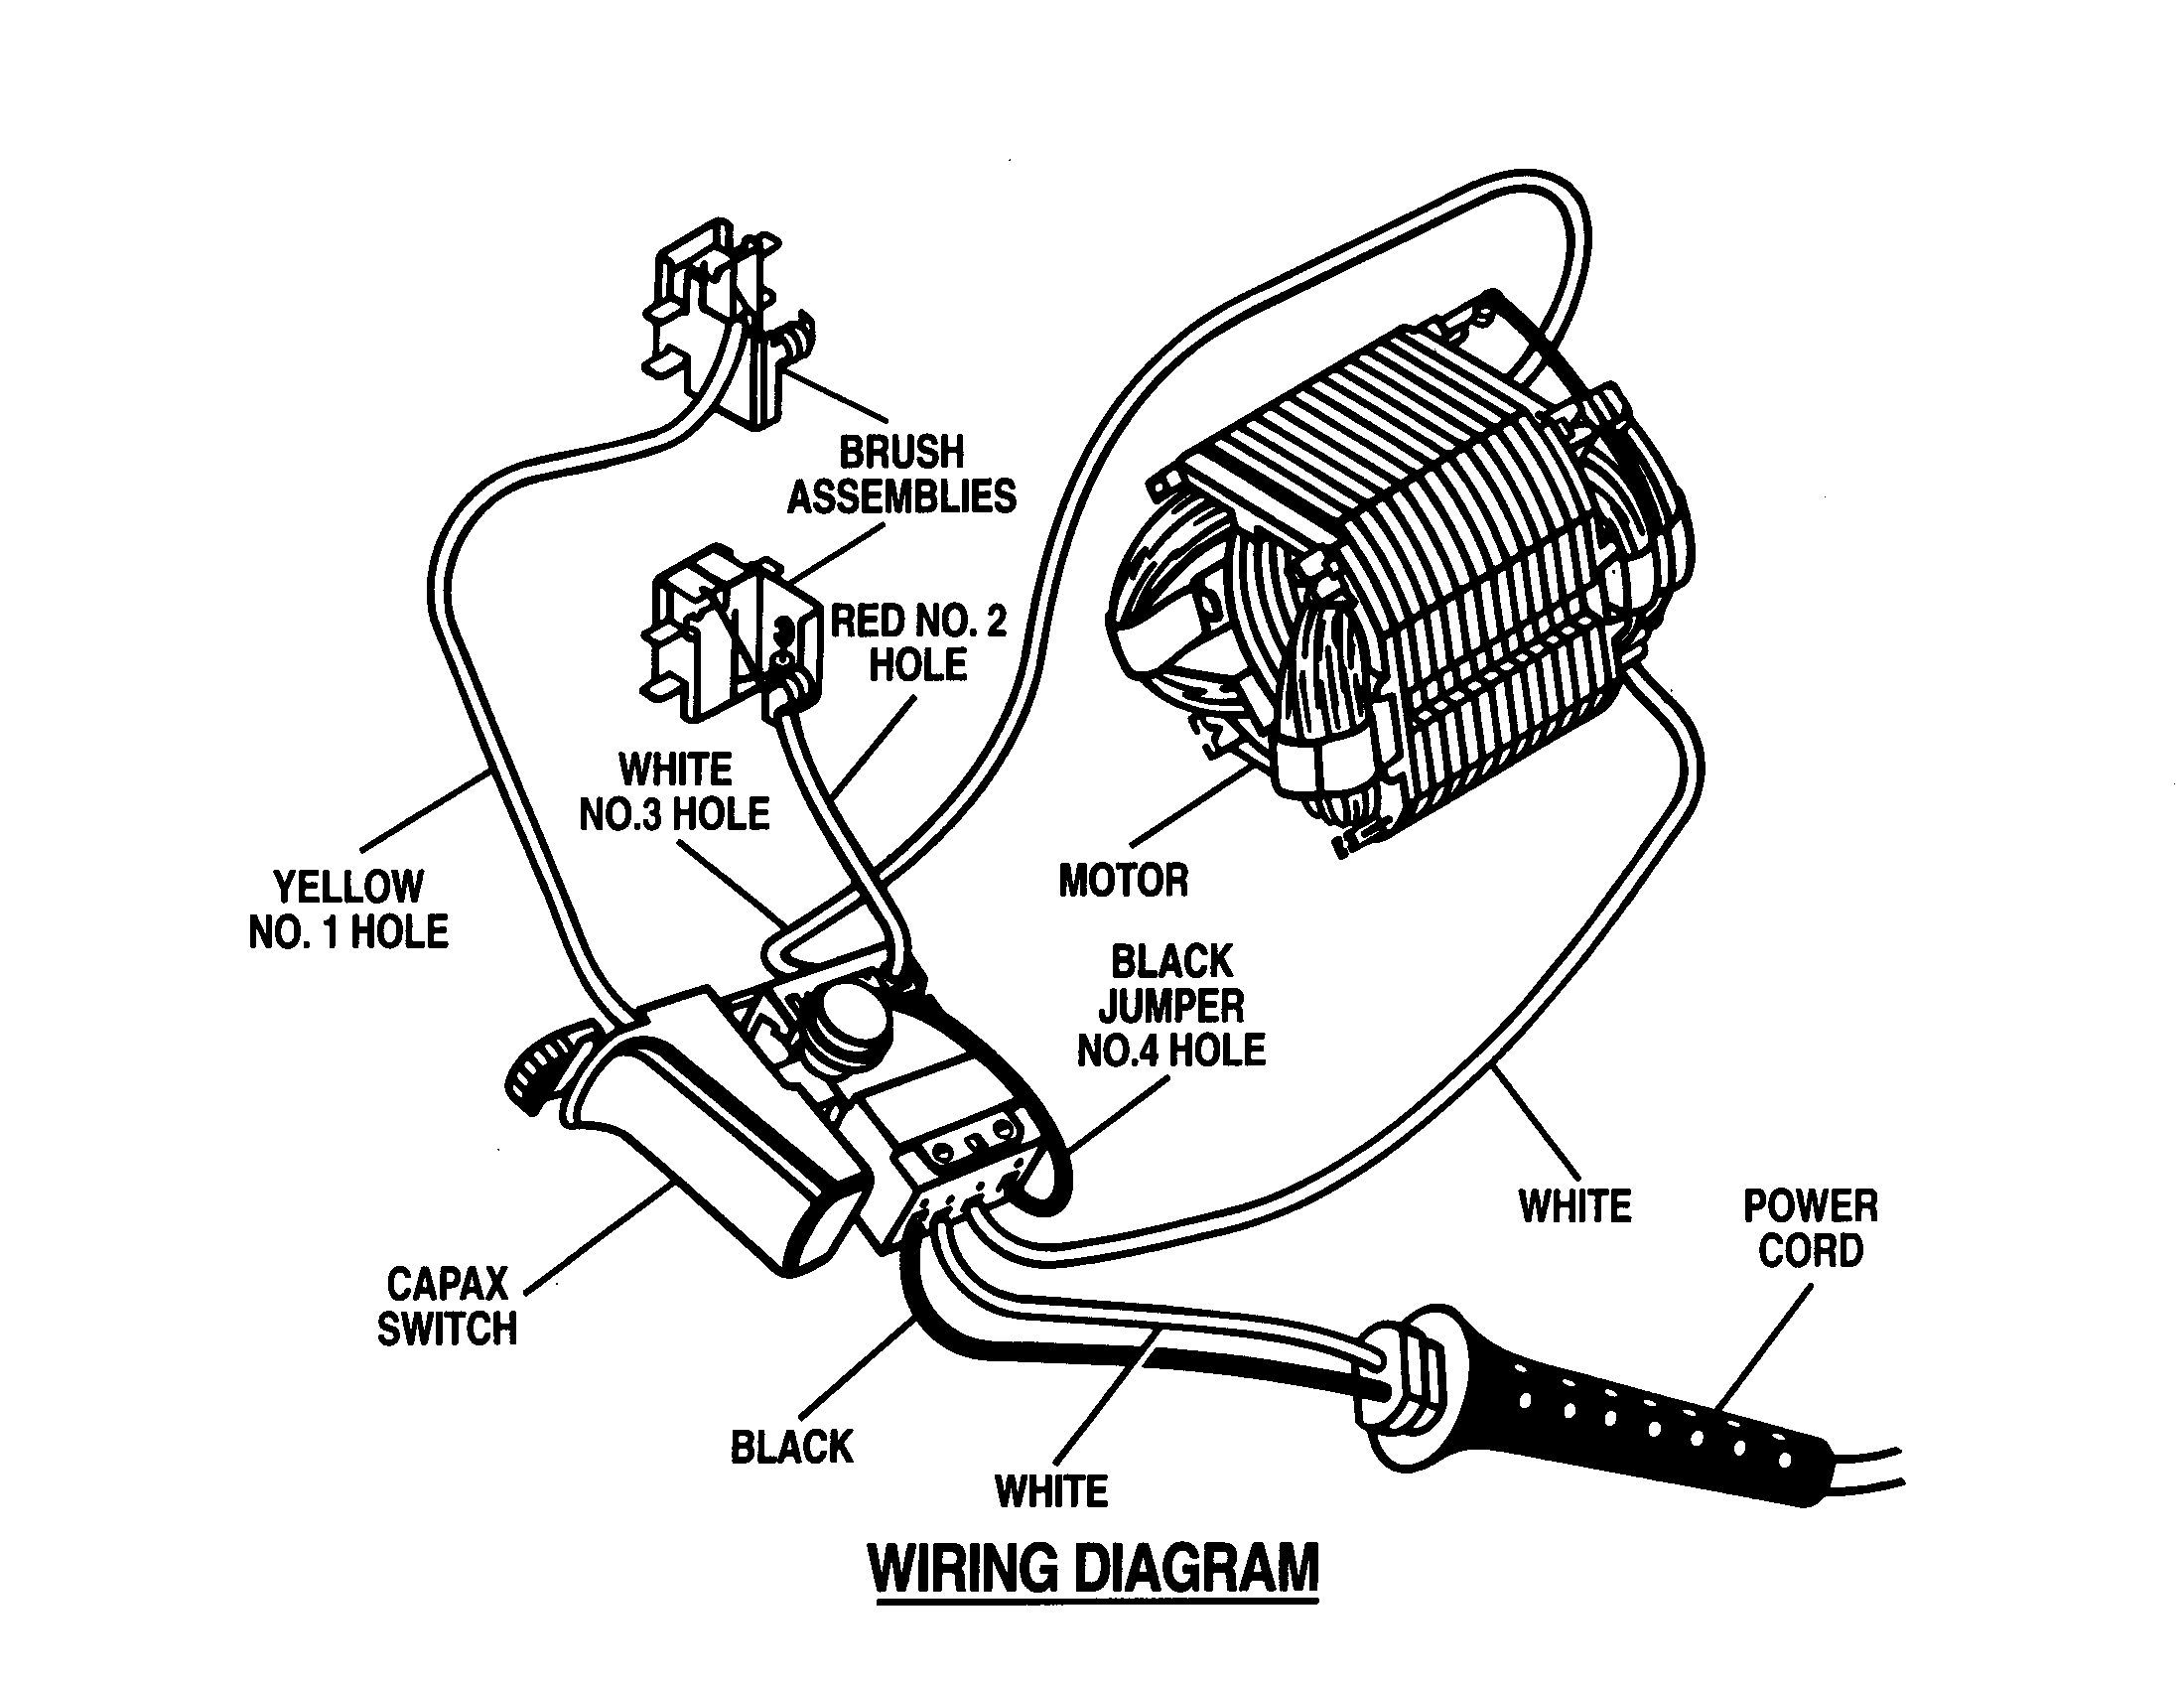 WIRING DIAGRAM Diagram & Parts List for Model 315273990 Craftsman-Parts